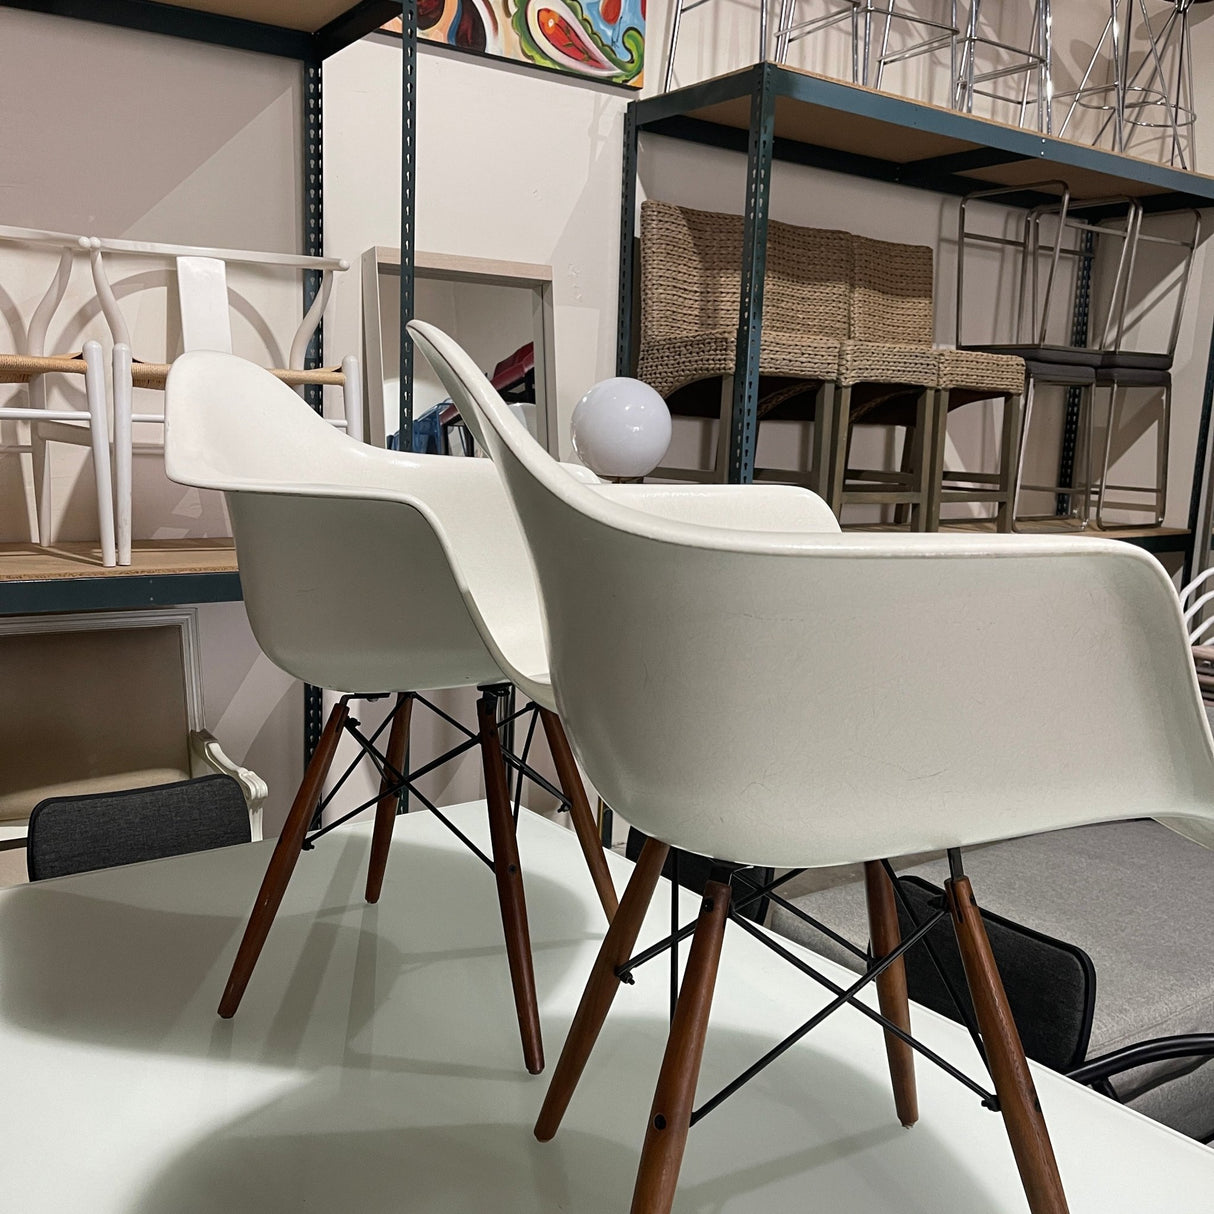 2 Modernica Case Study Fiberglass Chairs - enliven mart